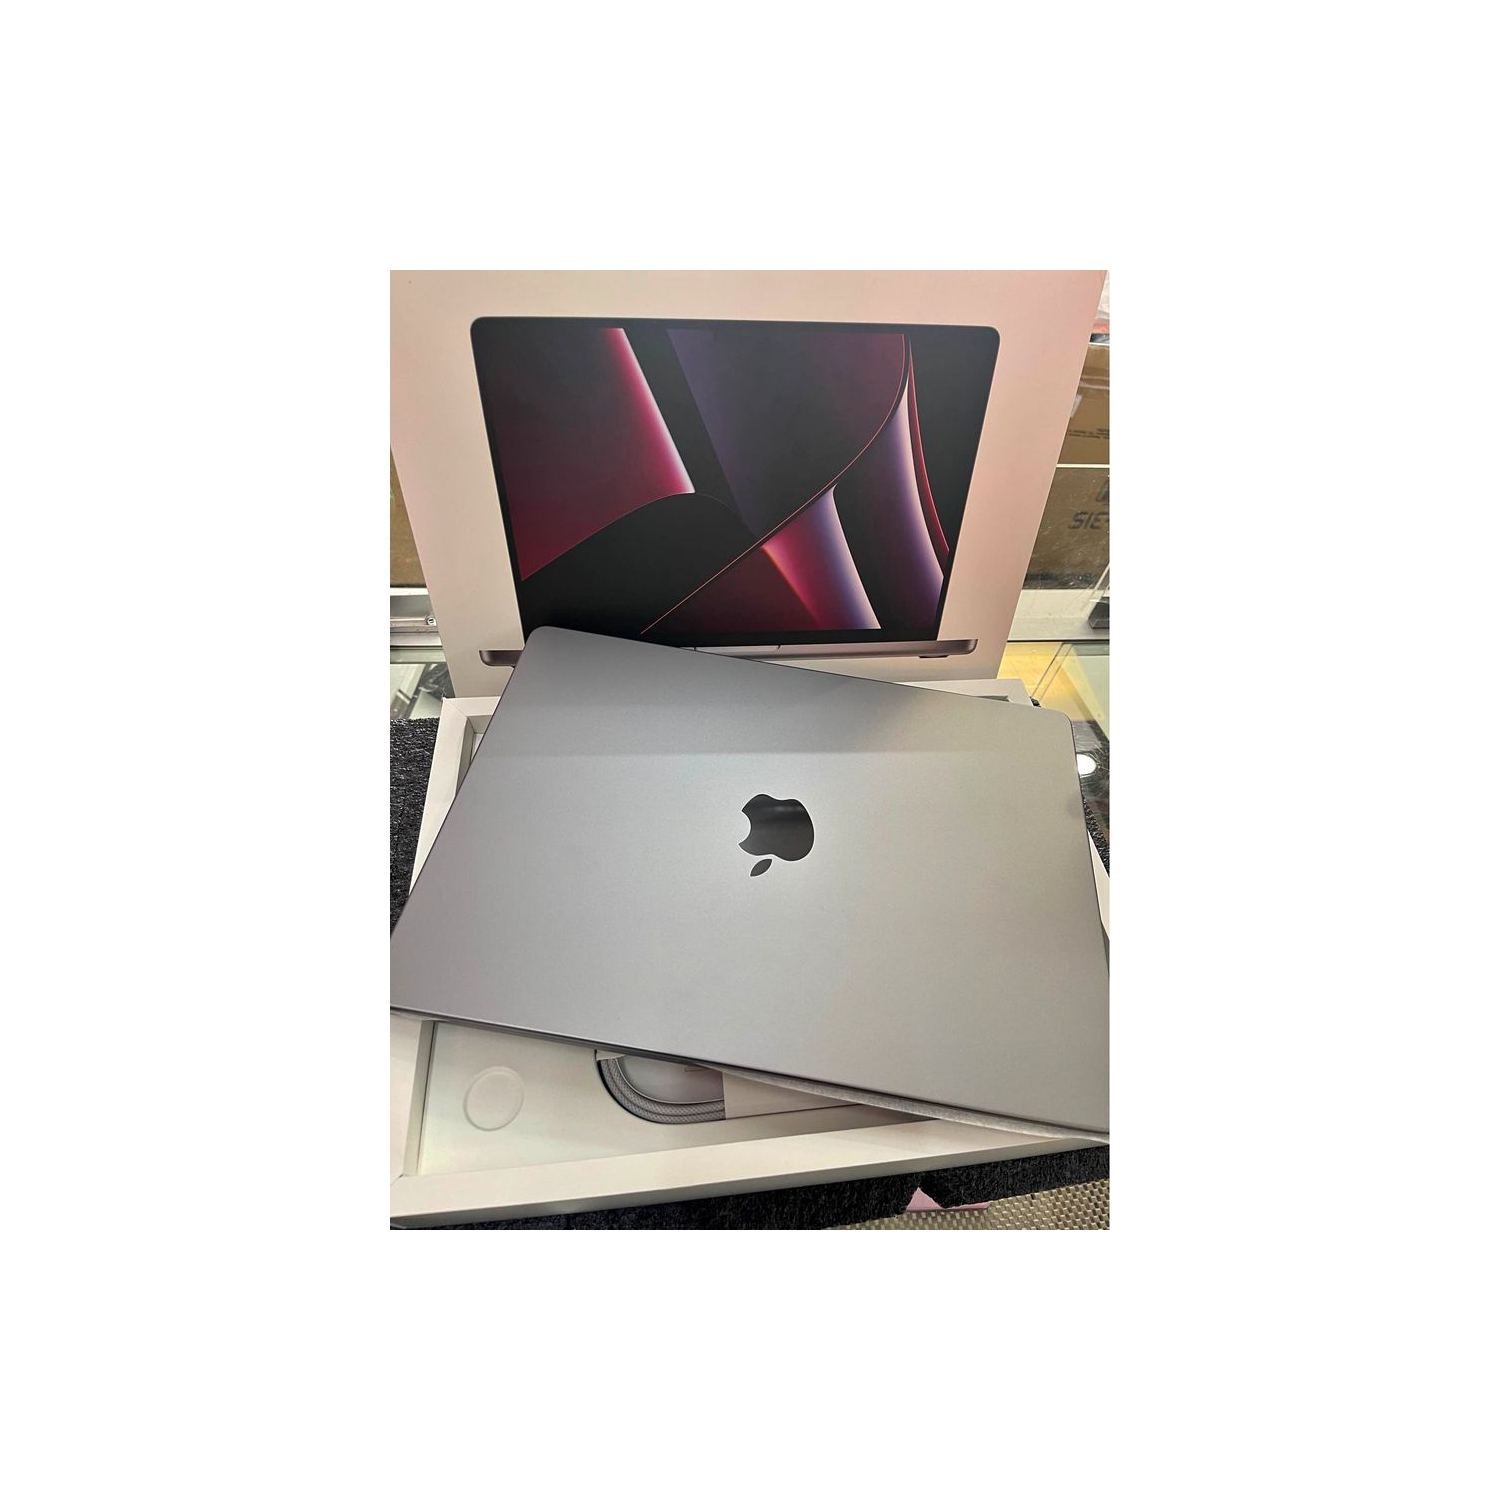 Apple MacBook Pro 16" (2021) - Space Grey (Apple M1 Pro Chip / 512GB SSD / 16GB RAM) - English- Open Box like New